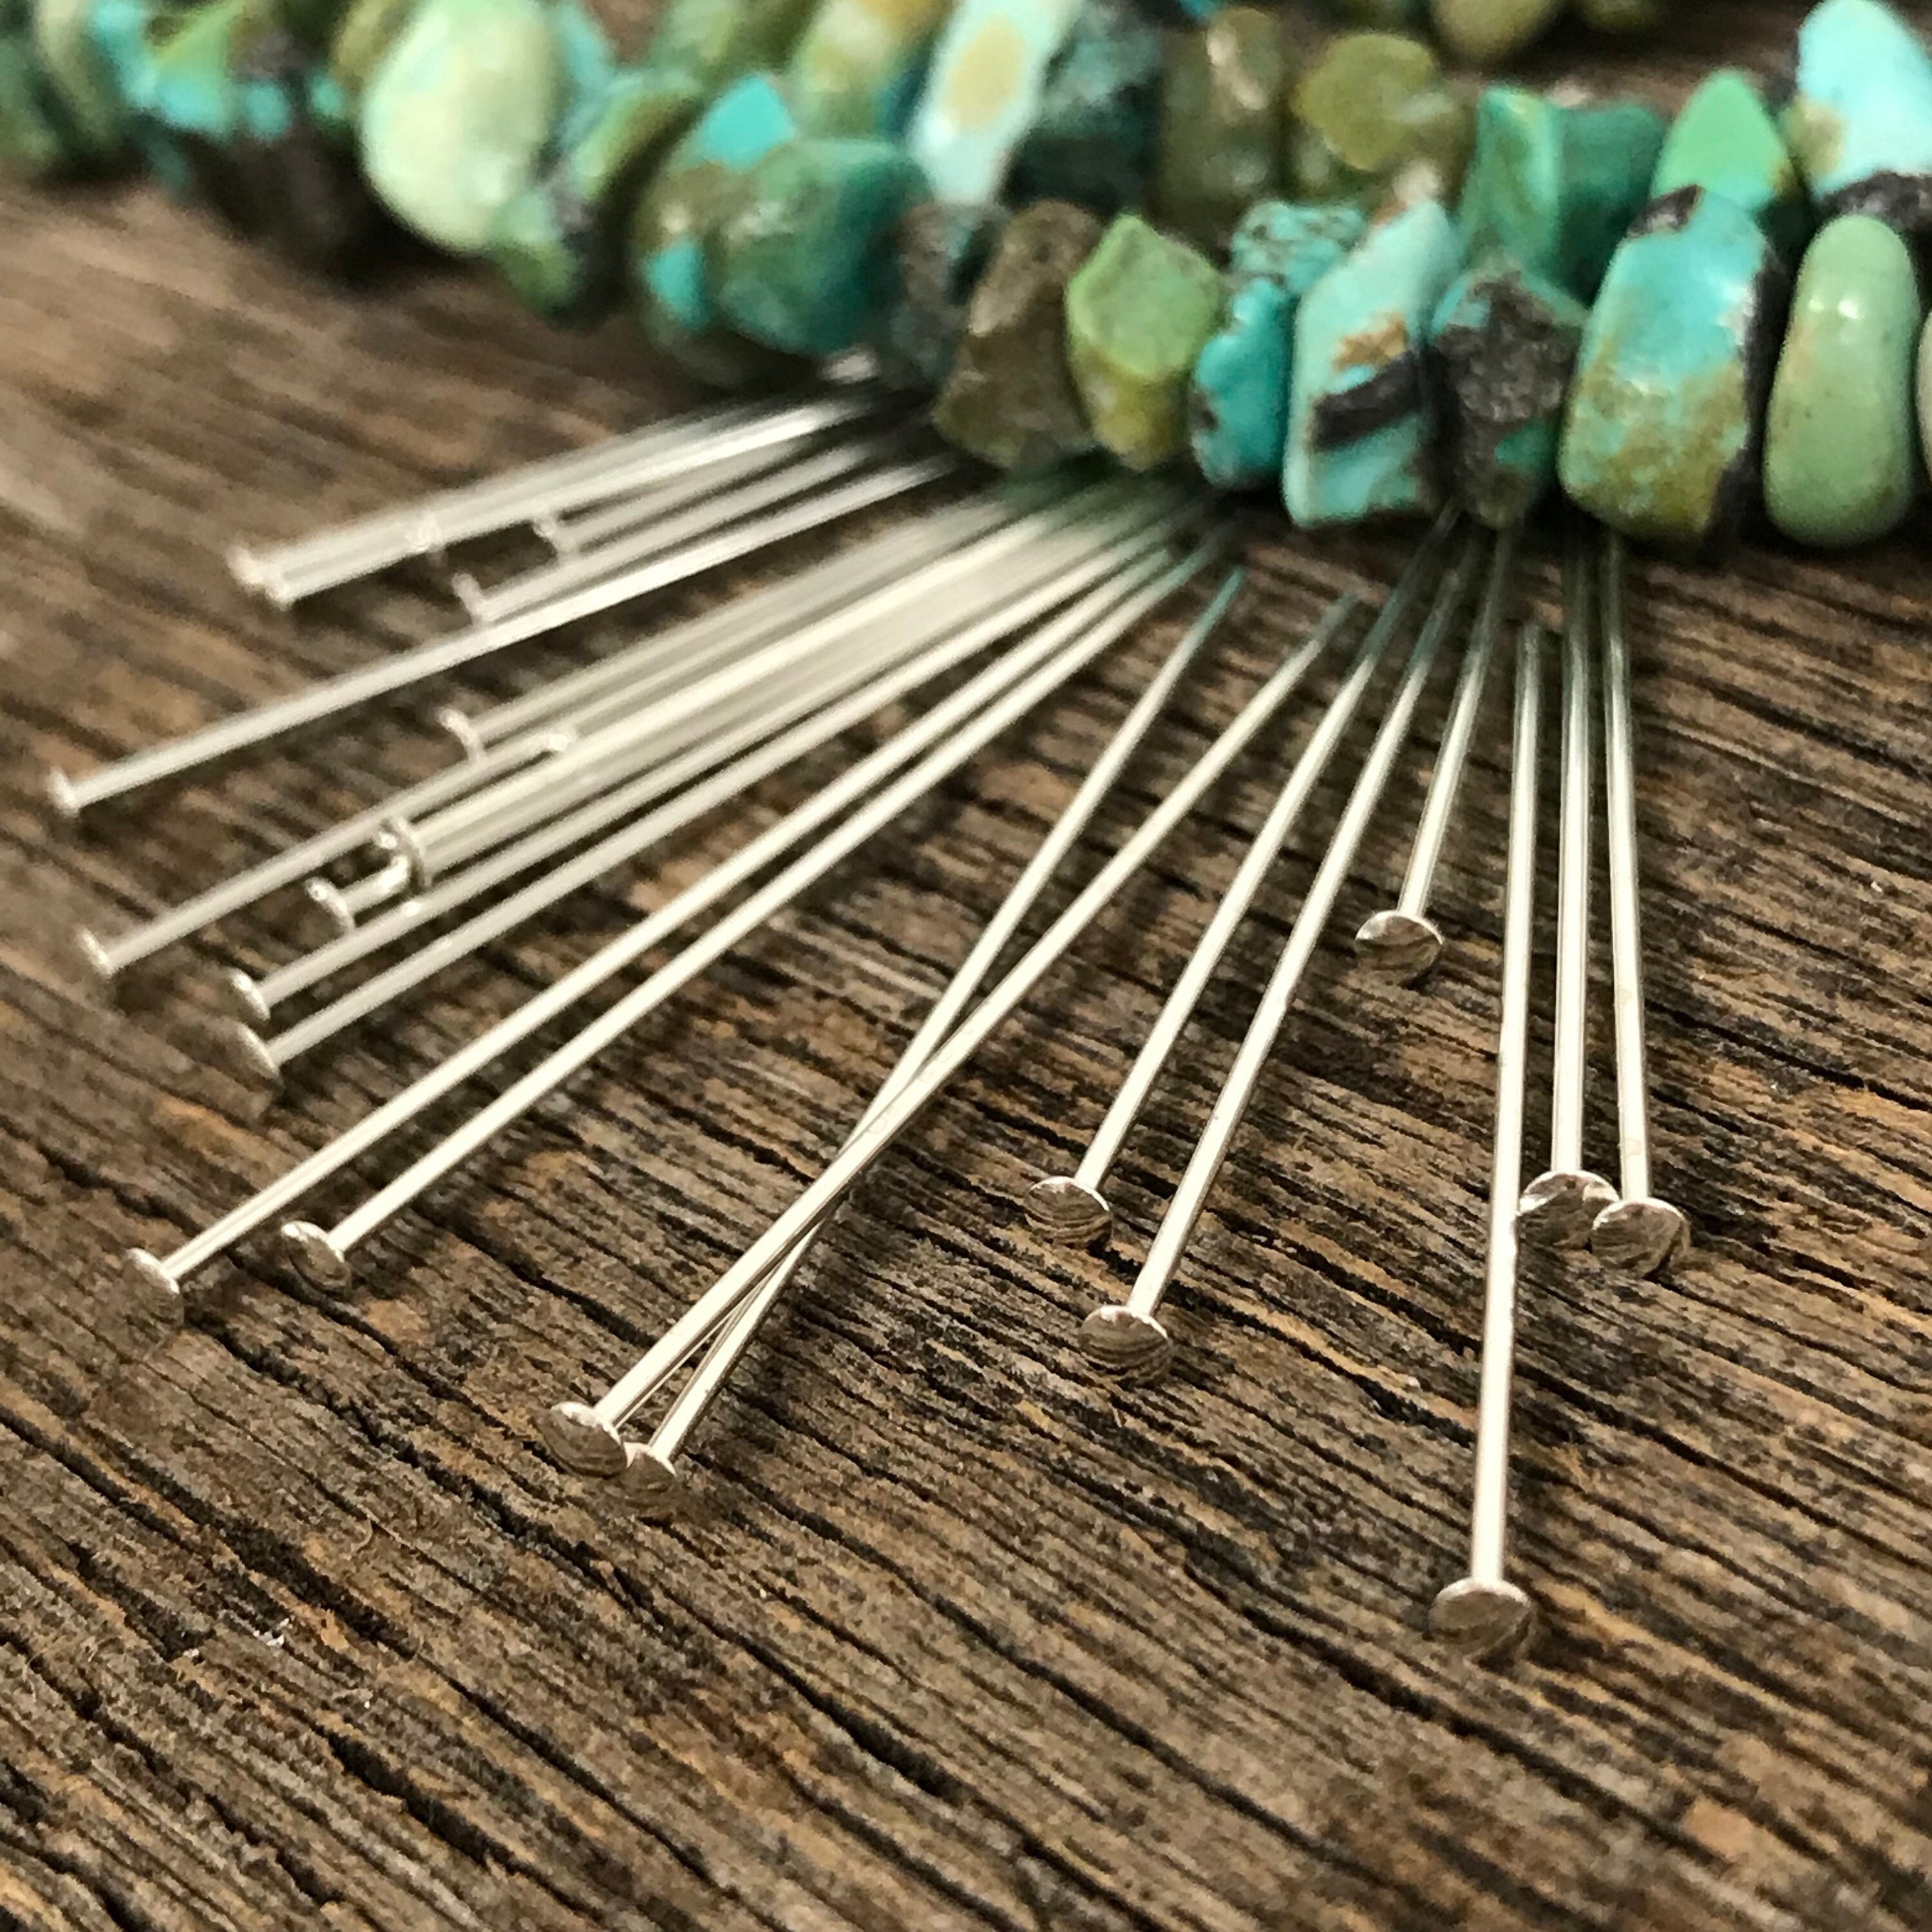 500 Bronze Flat Head Pins for jewelry making, 2-3/4 long 20ga, pin007